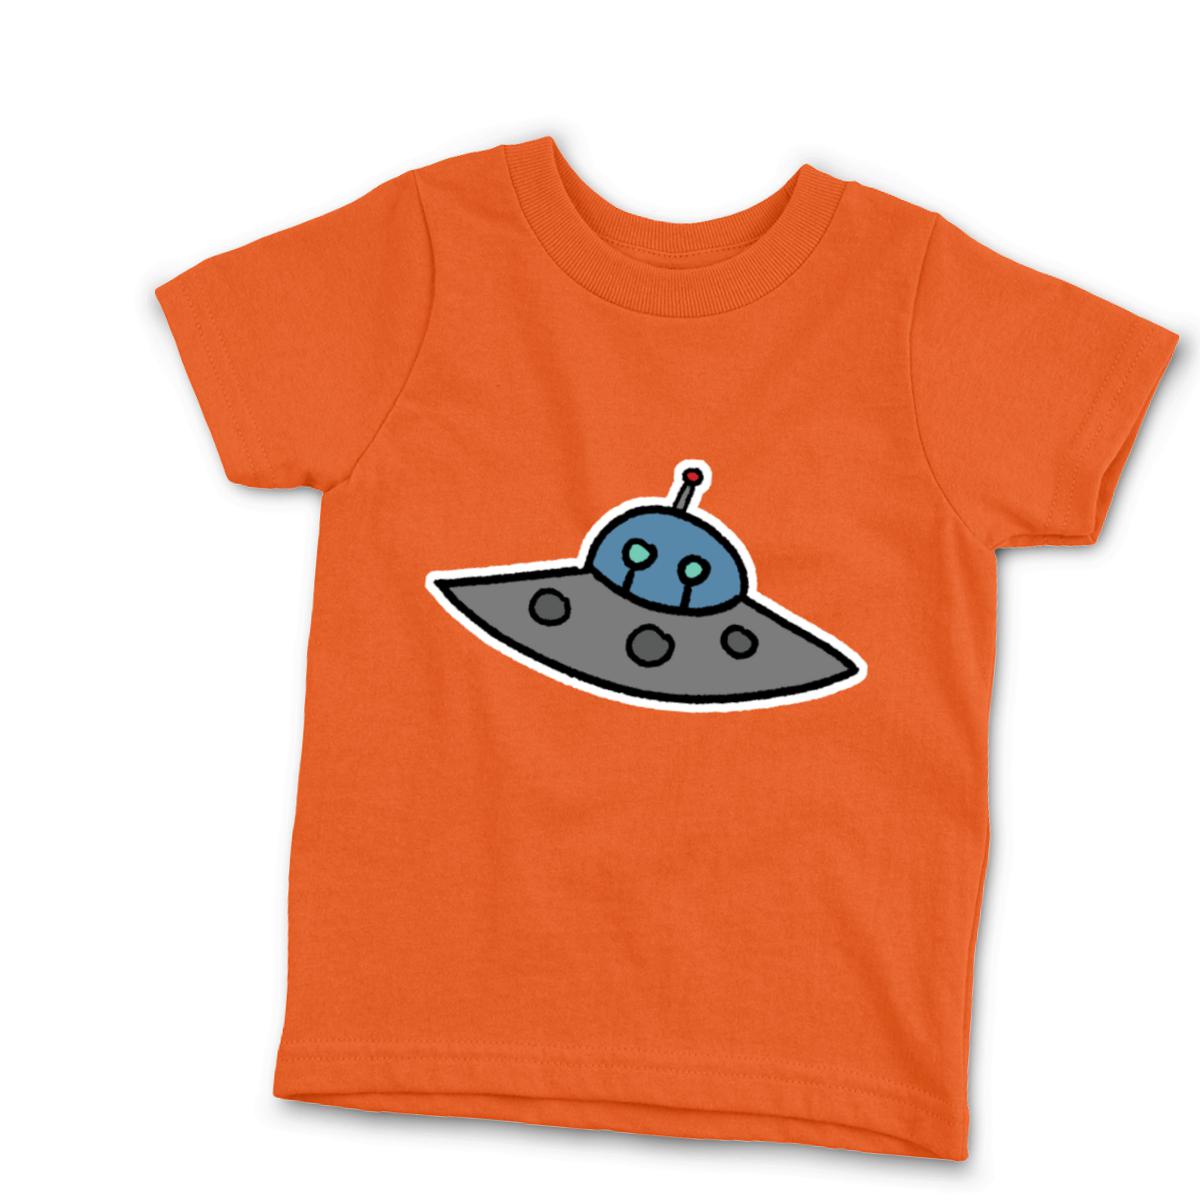 Flying Saucer Kid's Tee Small orange